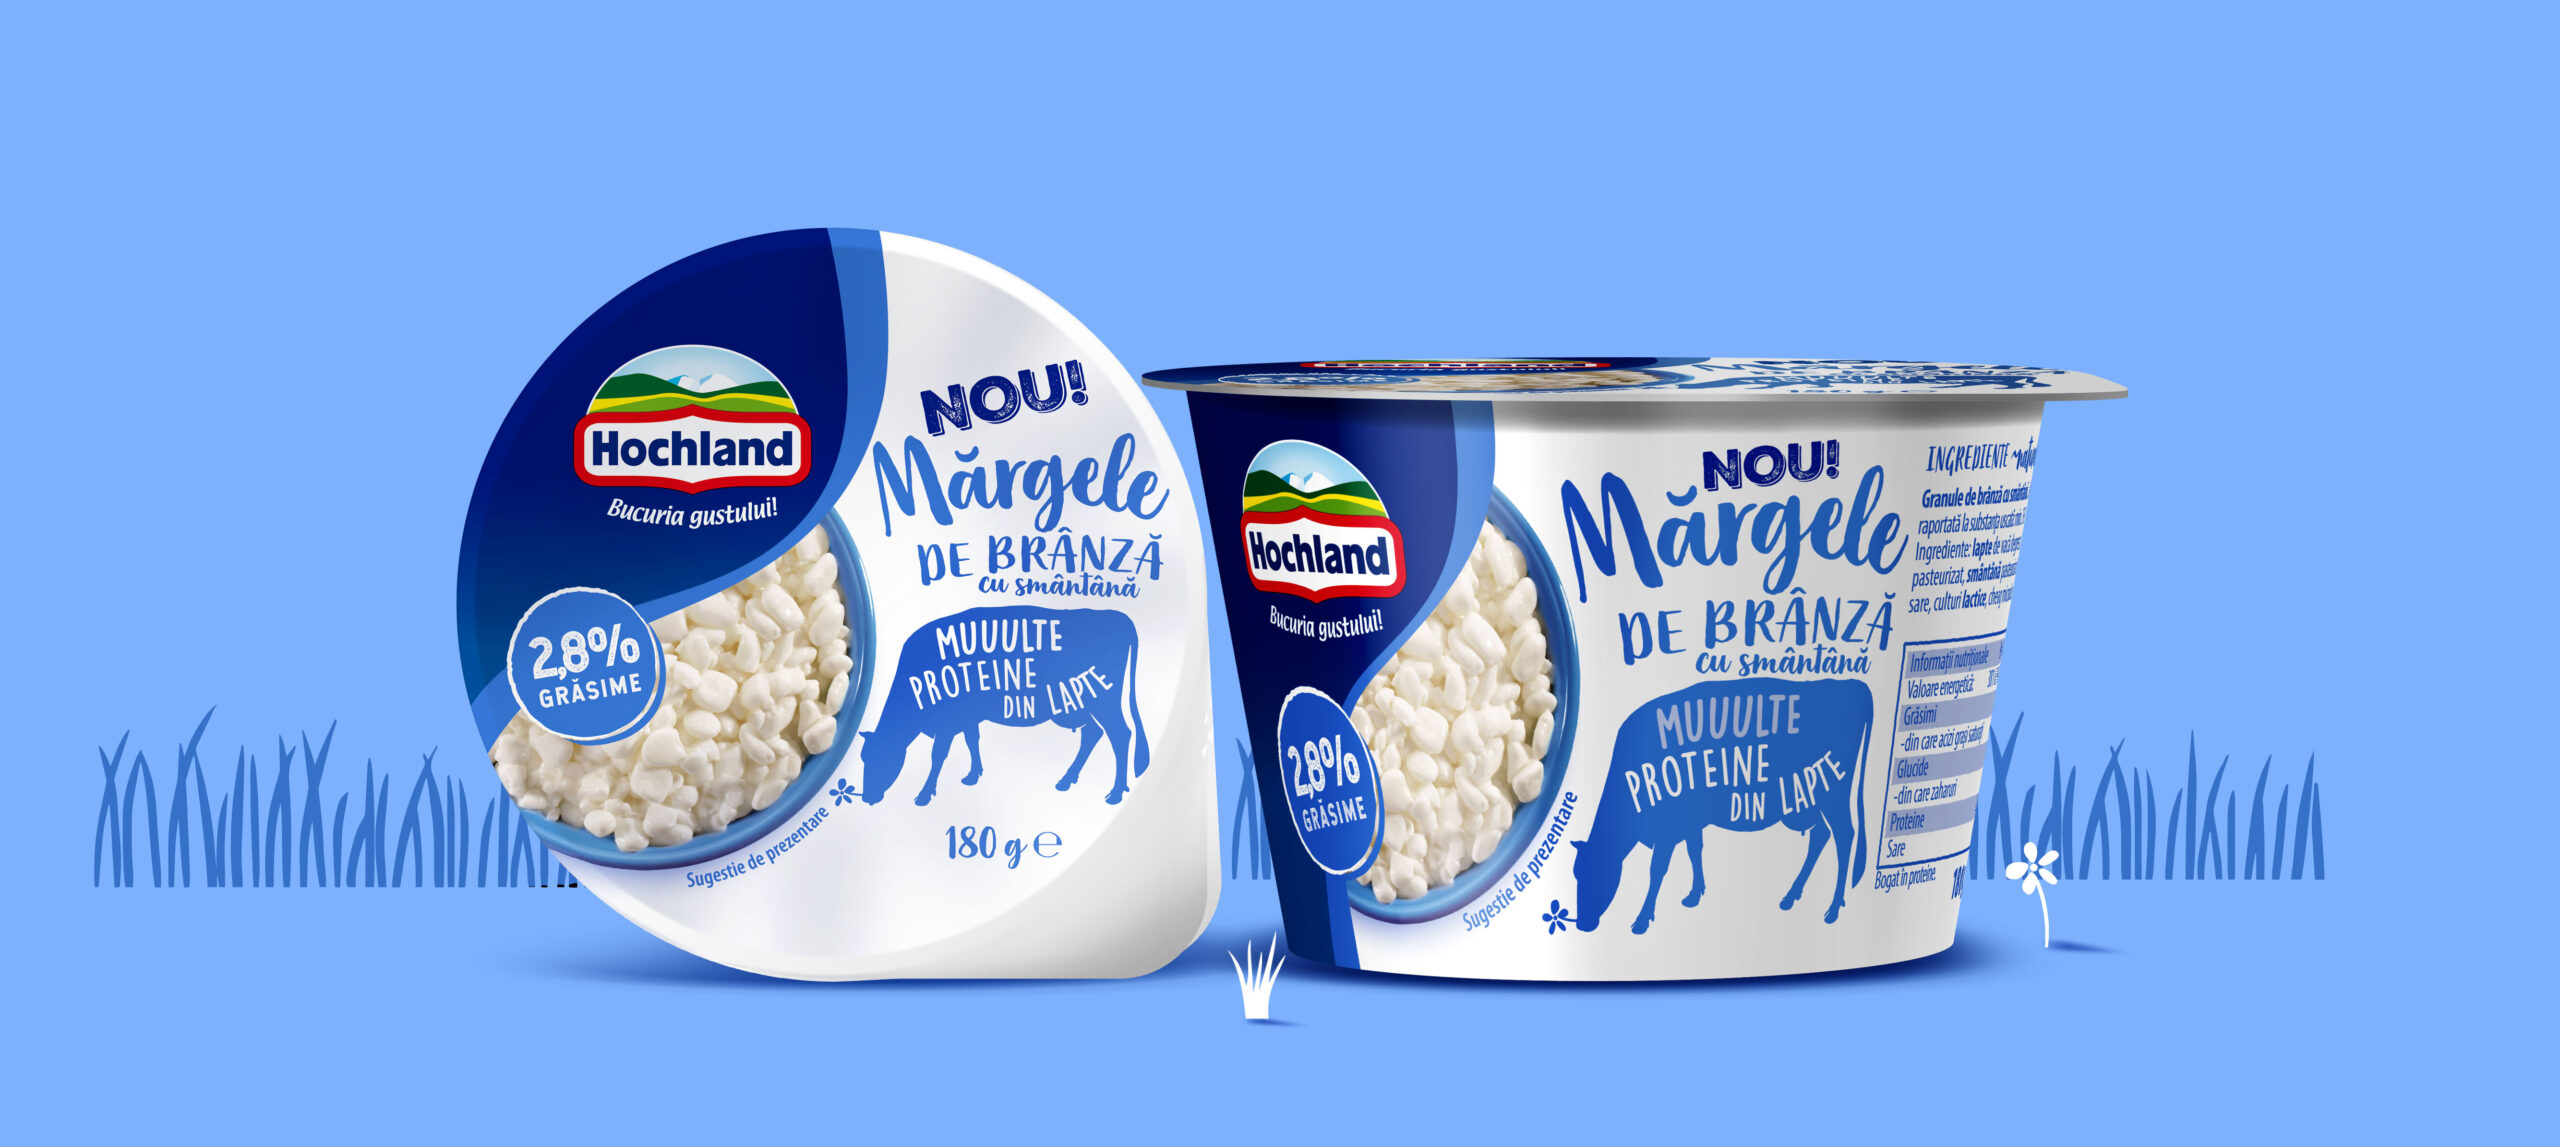 Cottage cheese packaging design for Hochland Margele de Branza line - 2,8% fat.